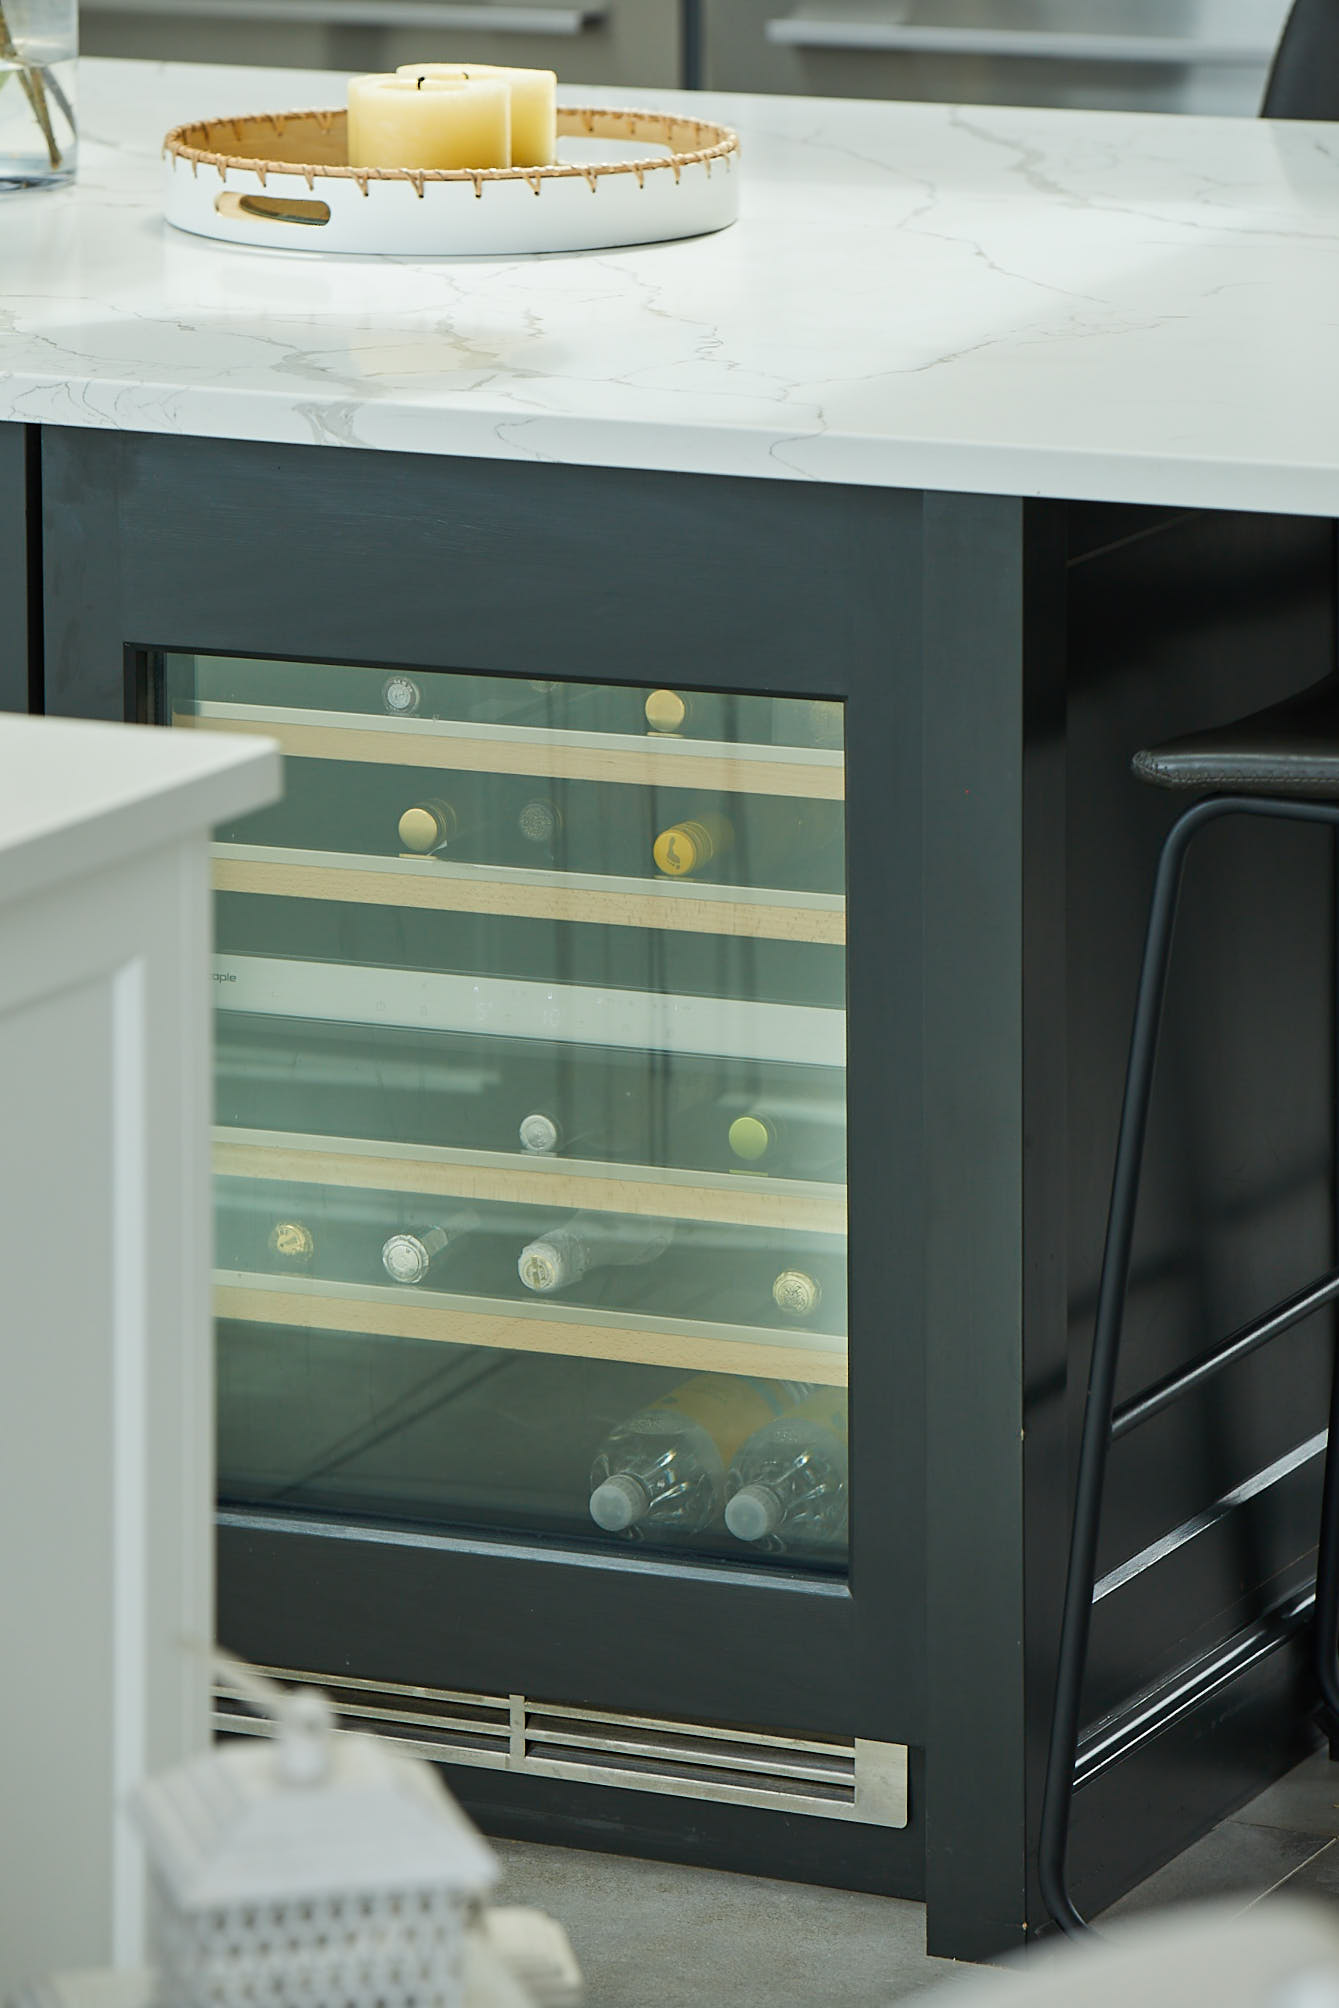 Integrated wine cooler in bespoke kitchen island